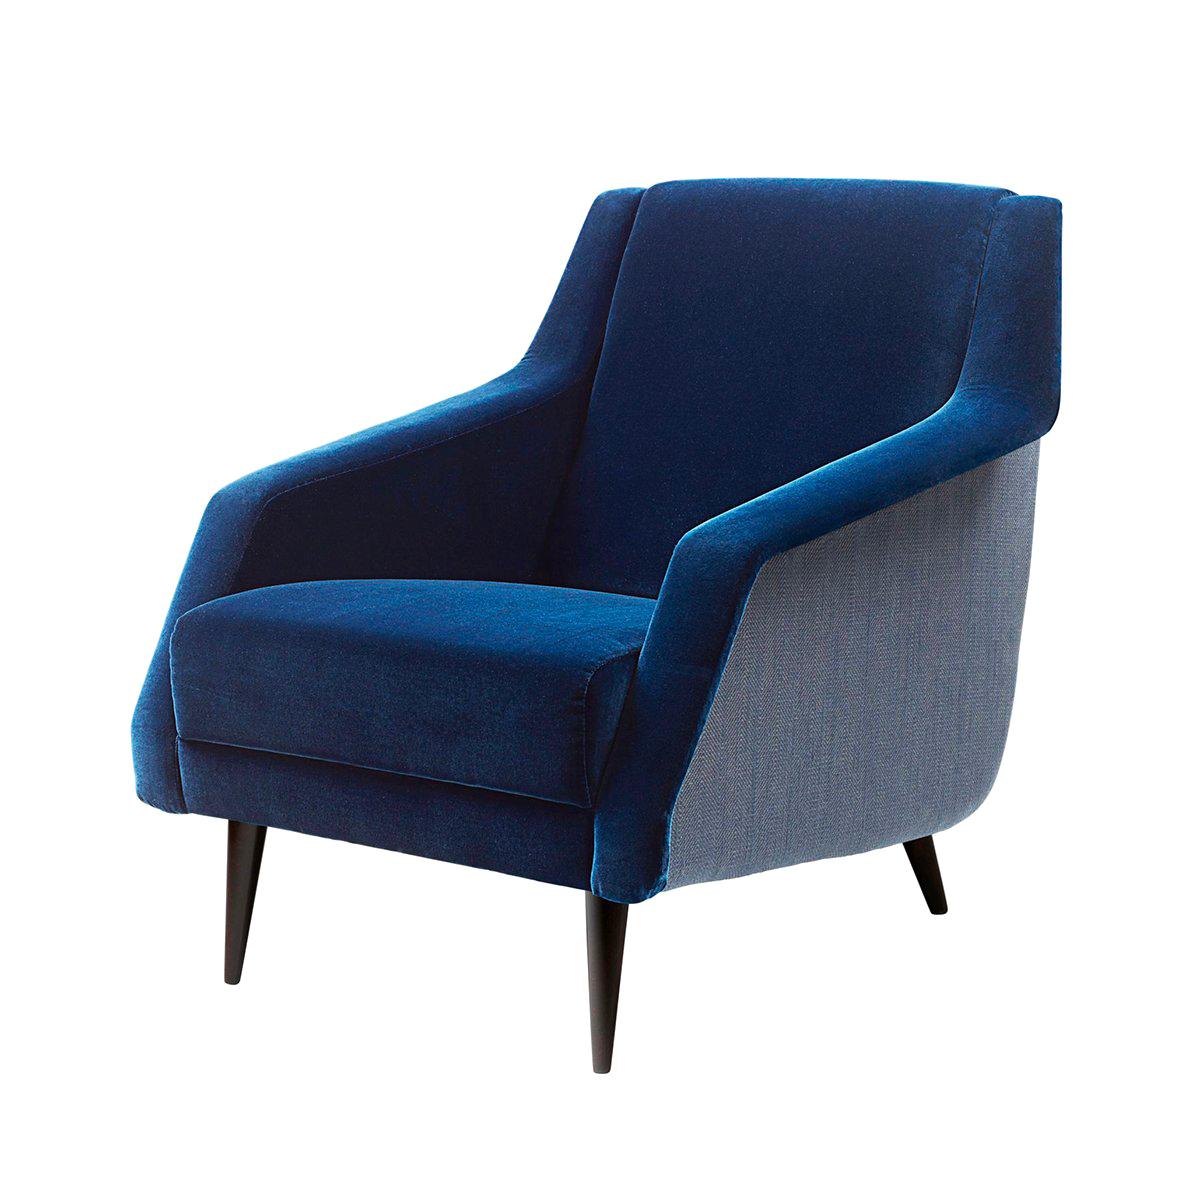 Carlo de Carli Re-Edition Mid-Century Modern Lounge Chair